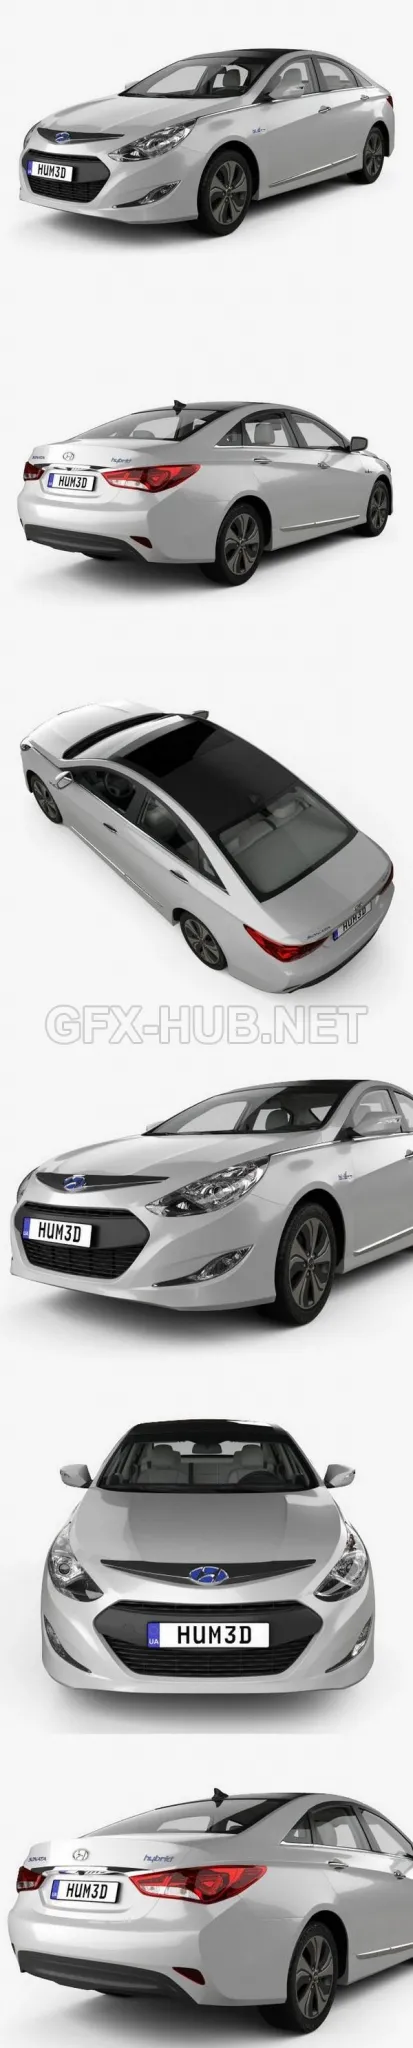 CAR – Hyundai Sonata hybrid with HQ interior 2015  3D Model